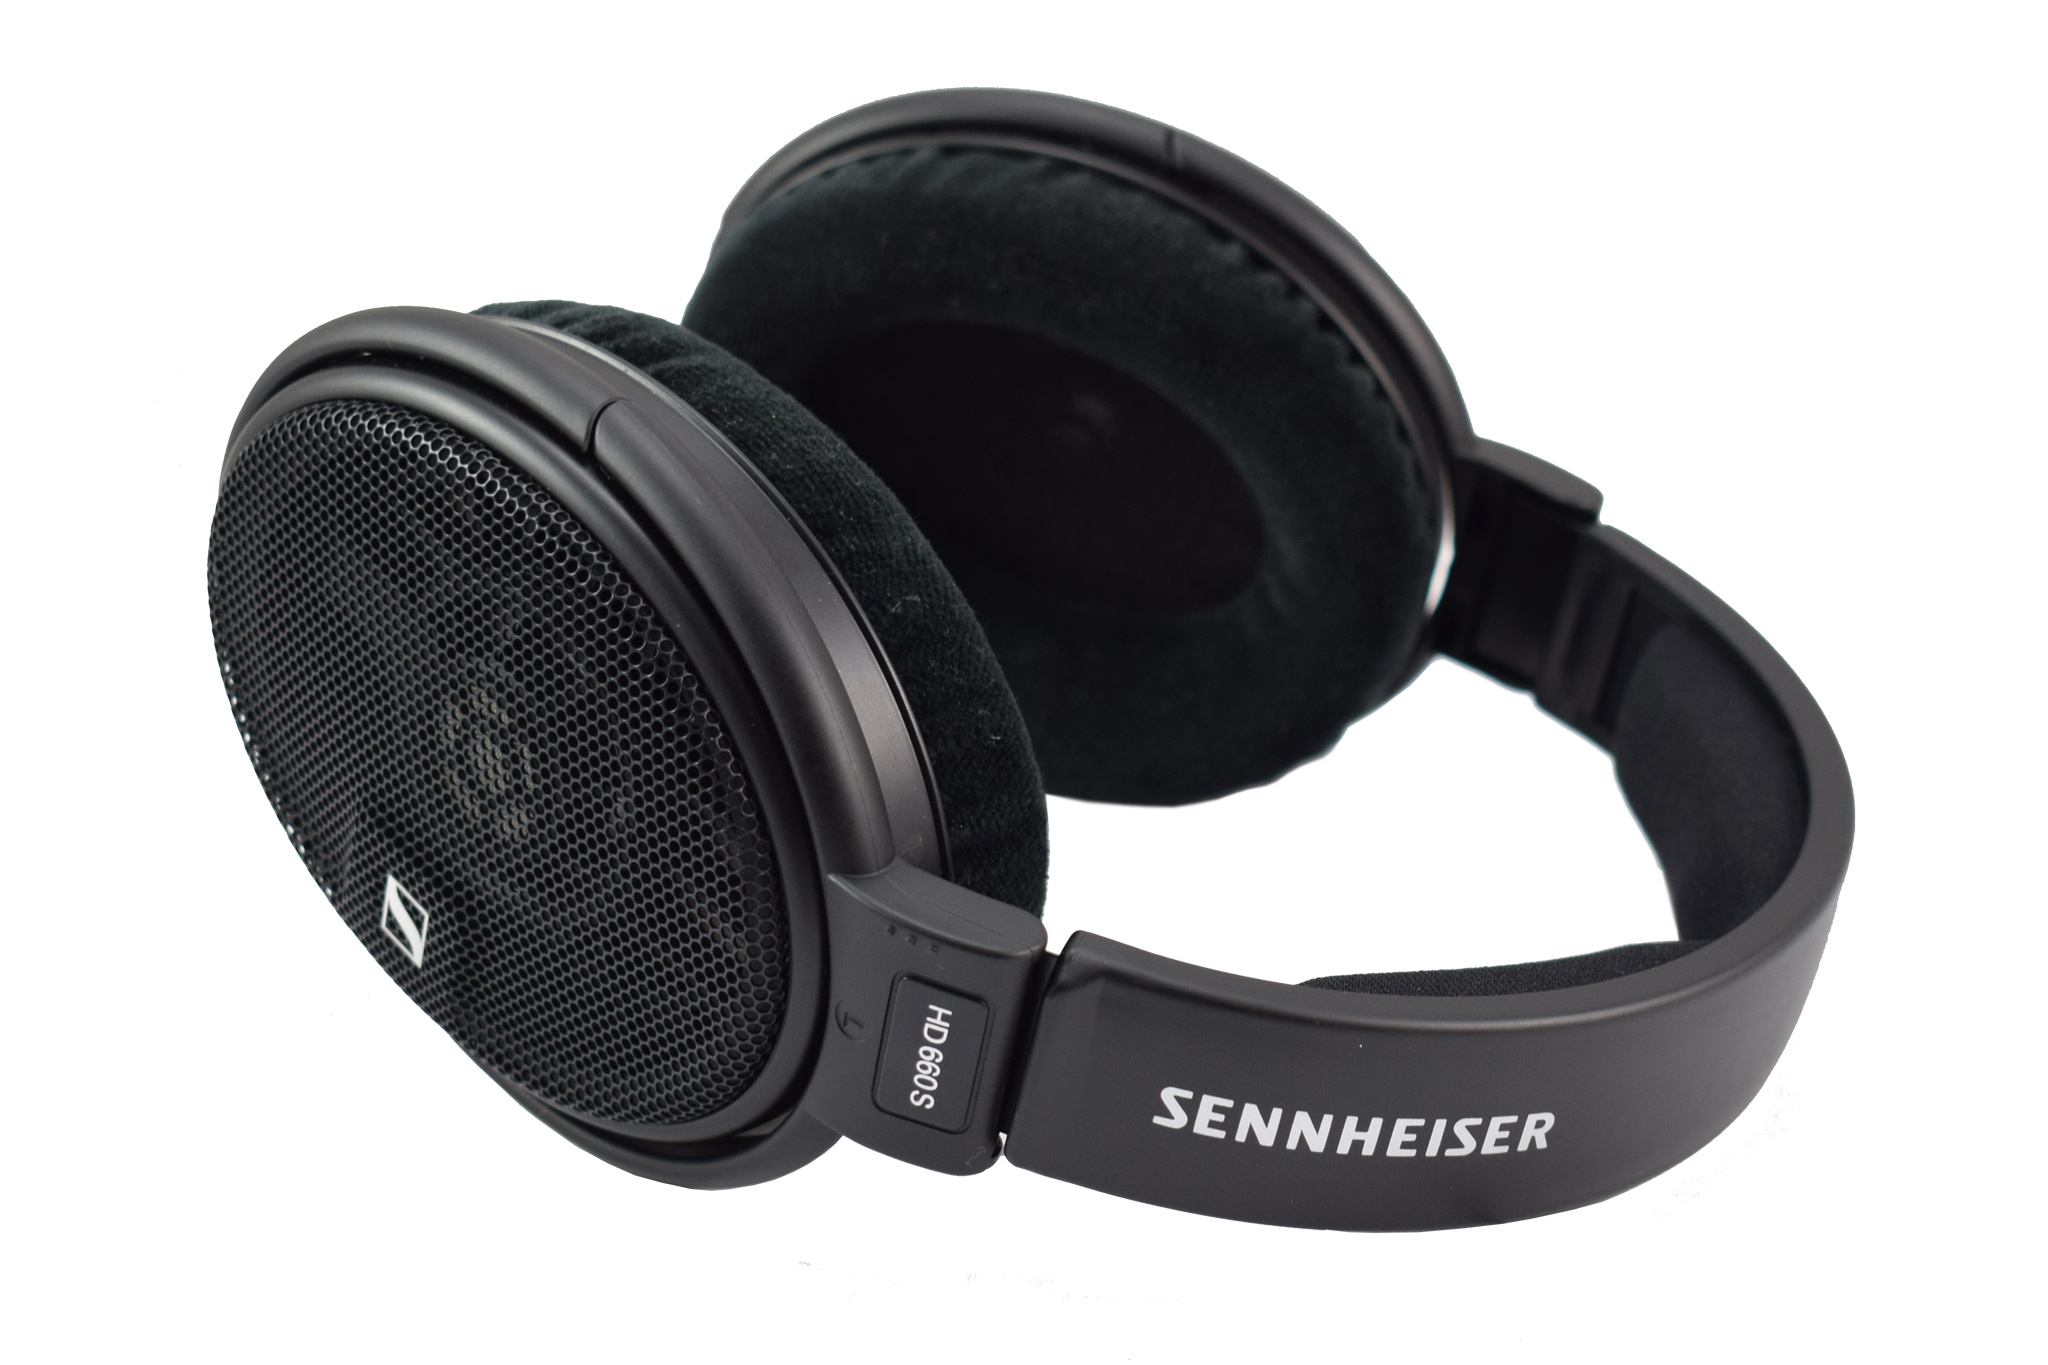 Sennheiser HD 660 S Headphone Review | KitGuru